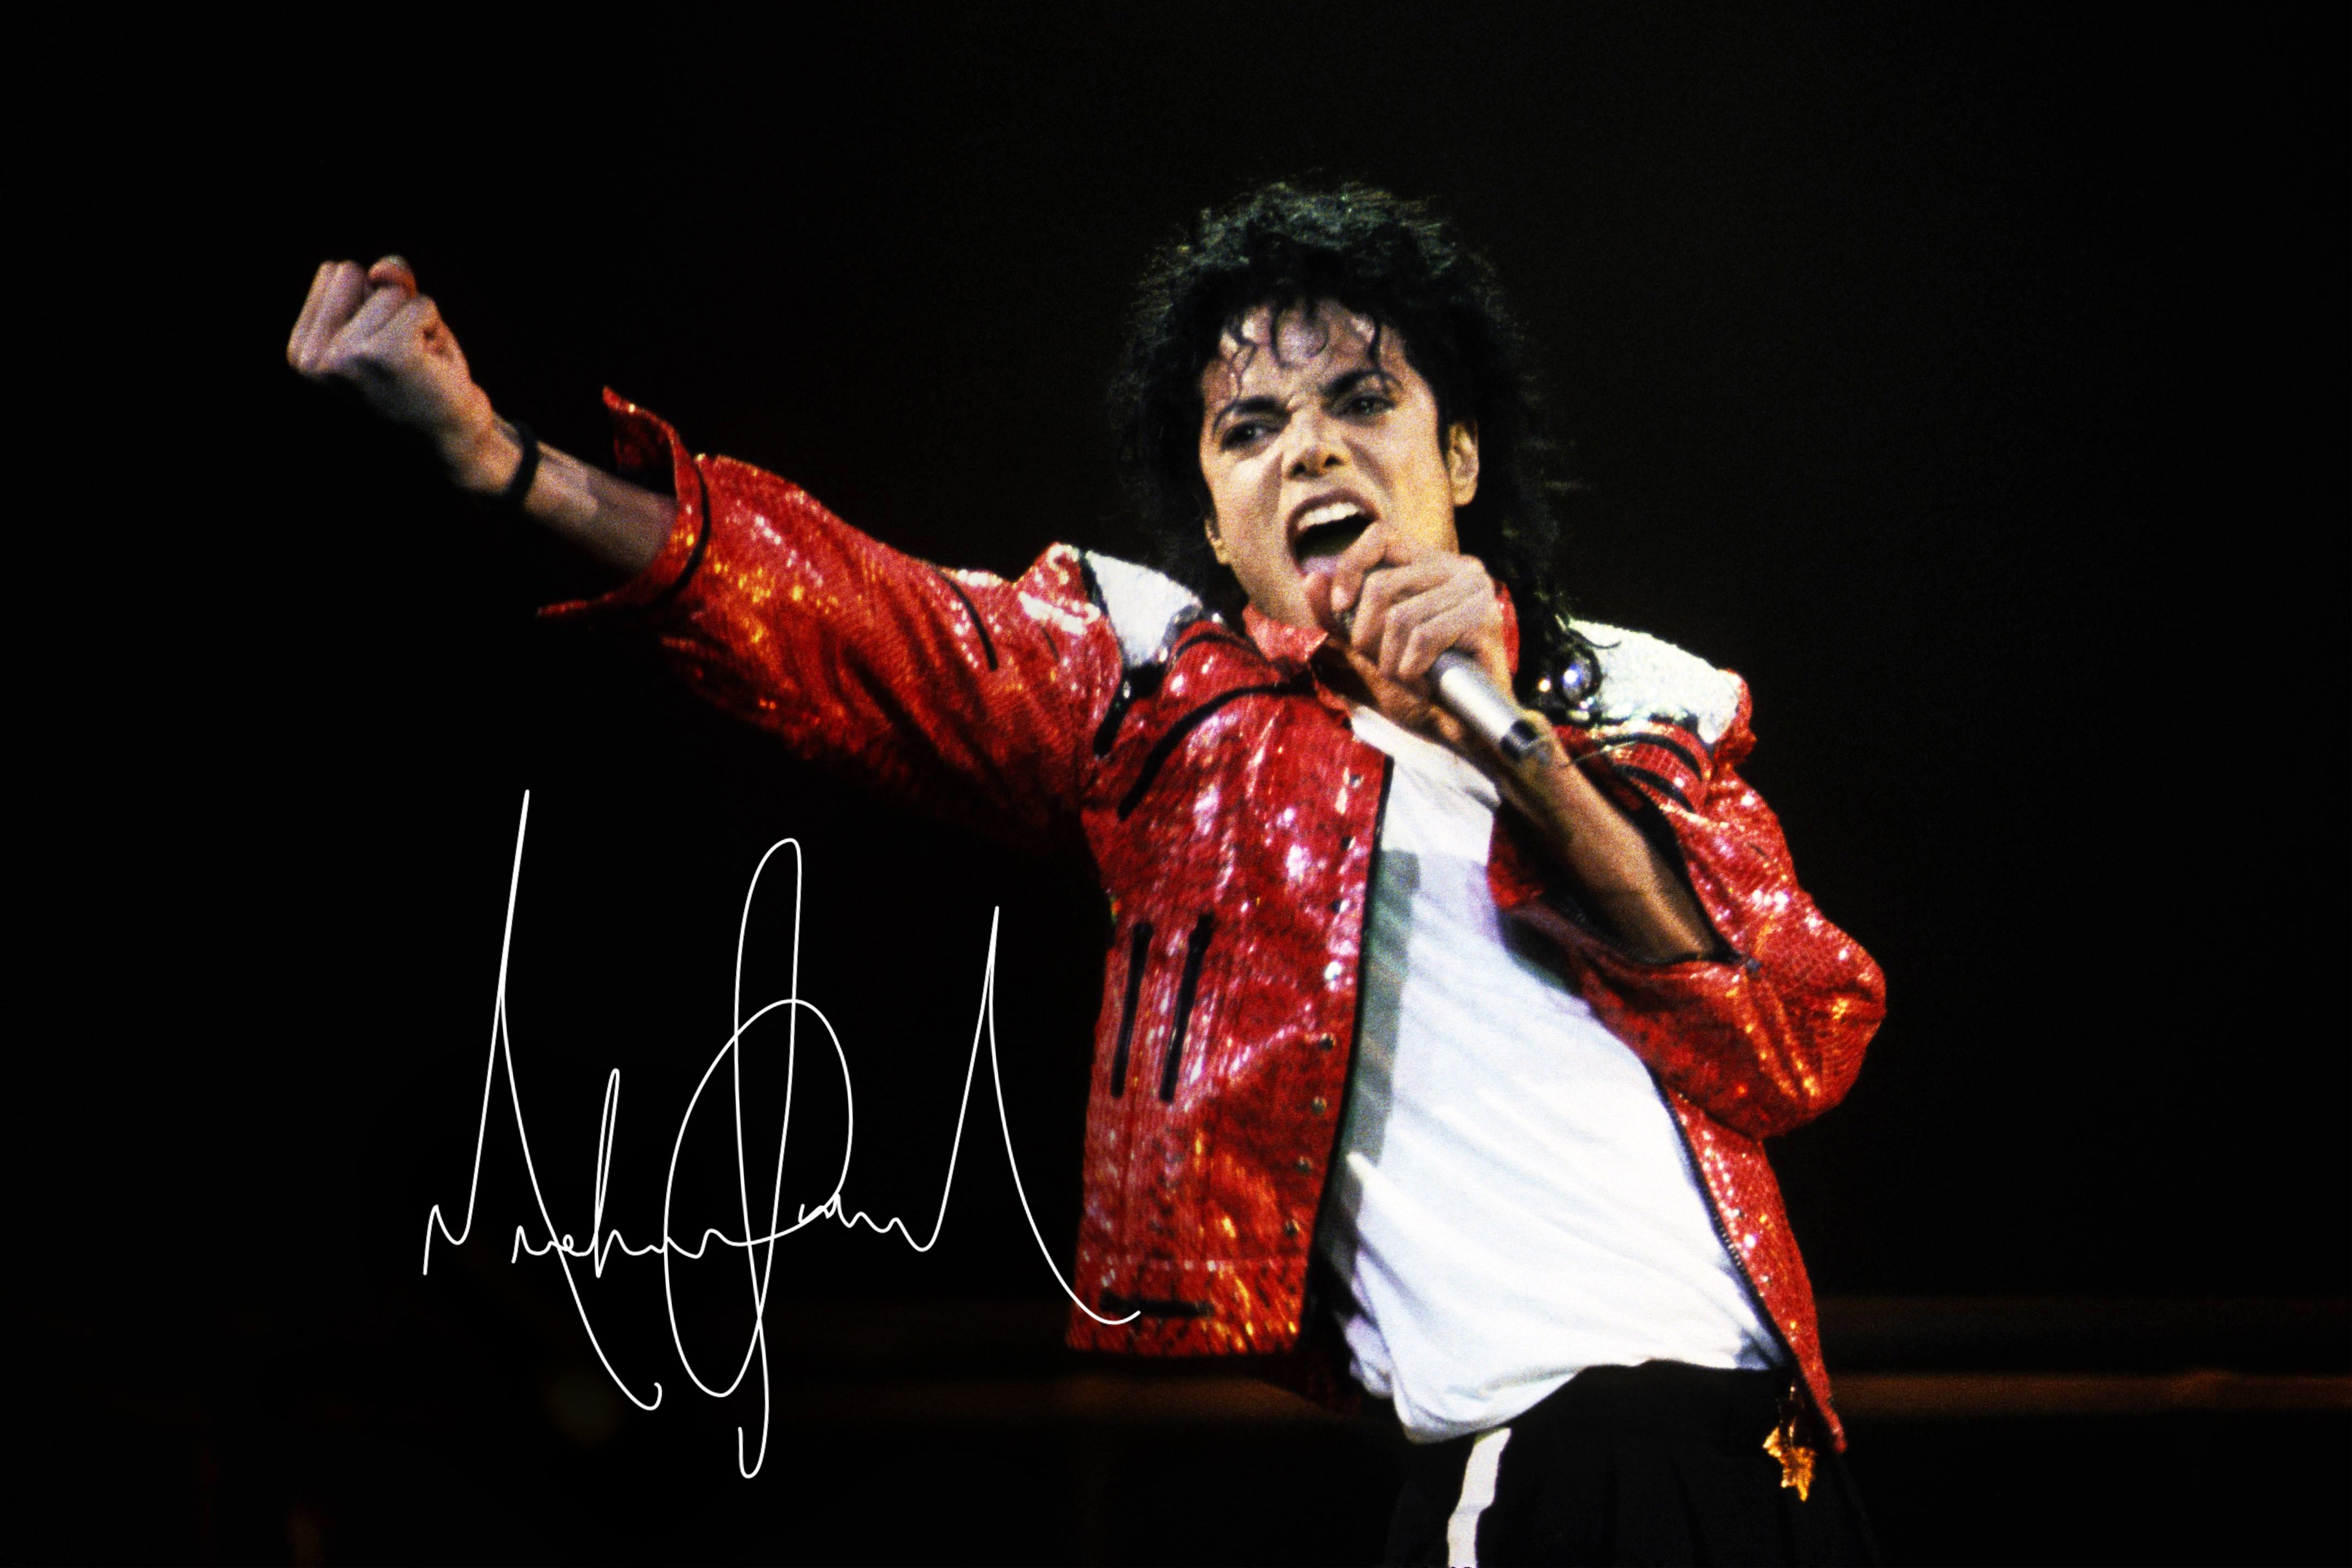 Michael Jackson's white glove sells for $350,000